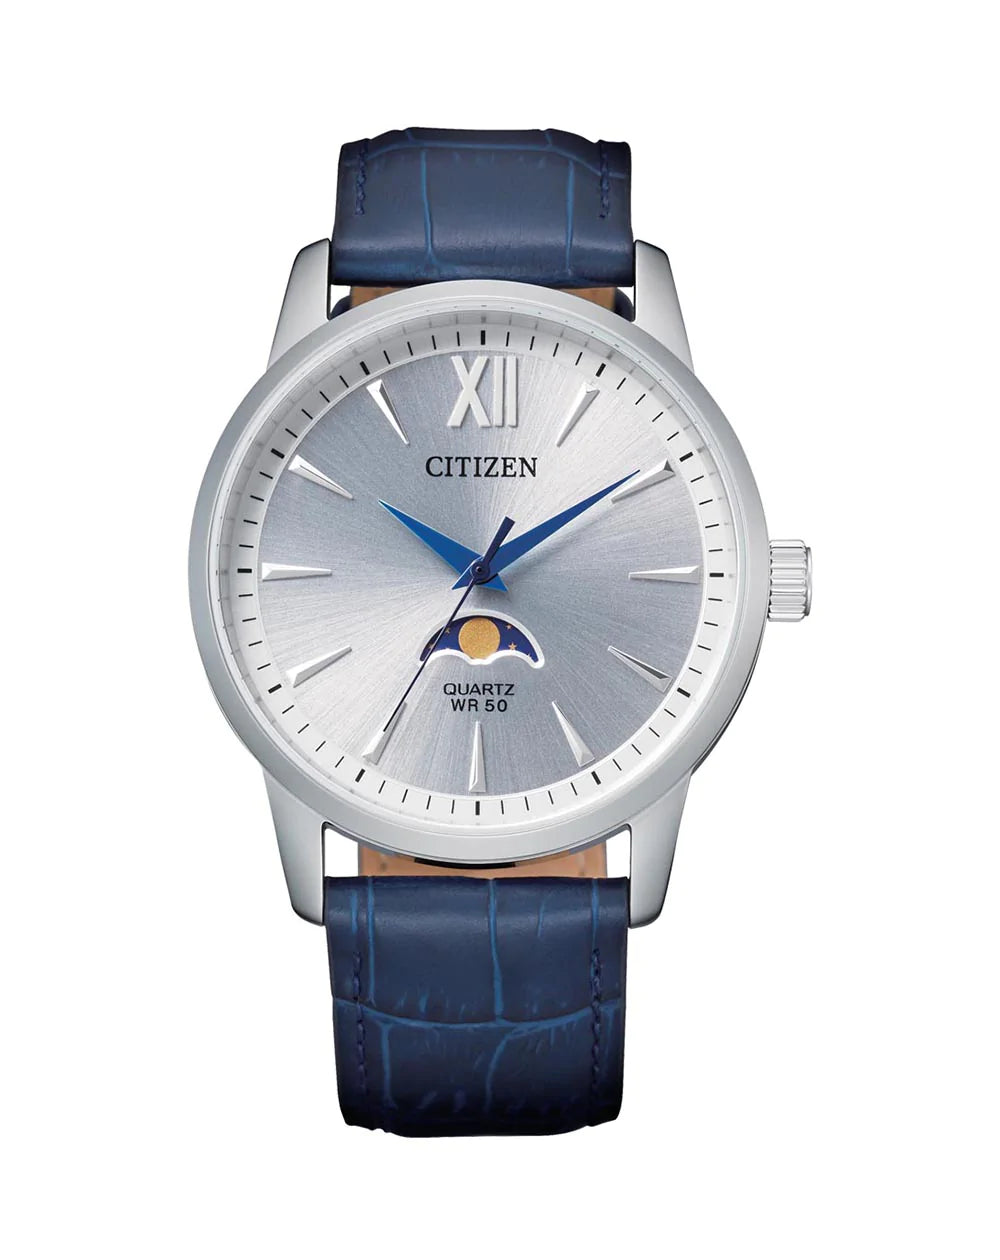 Gents Citizen Quartz Watch with Moon Phase Design